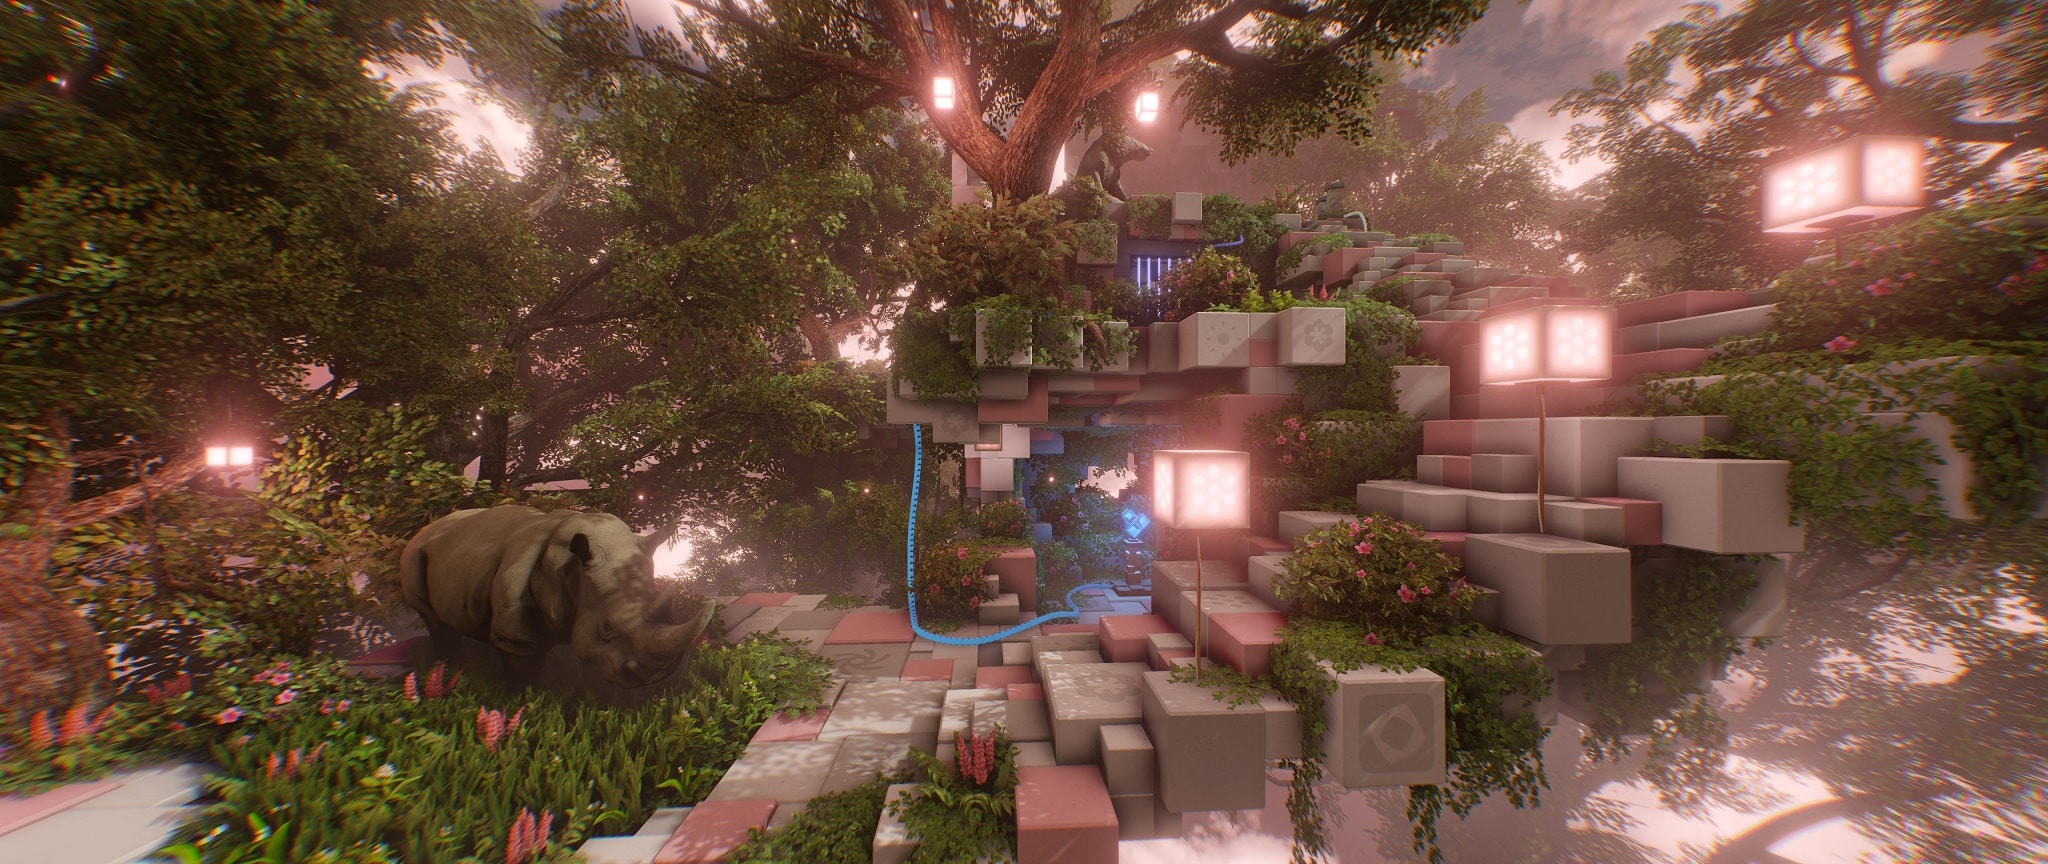 Jungle quest virtual reality screenshot 9 sml